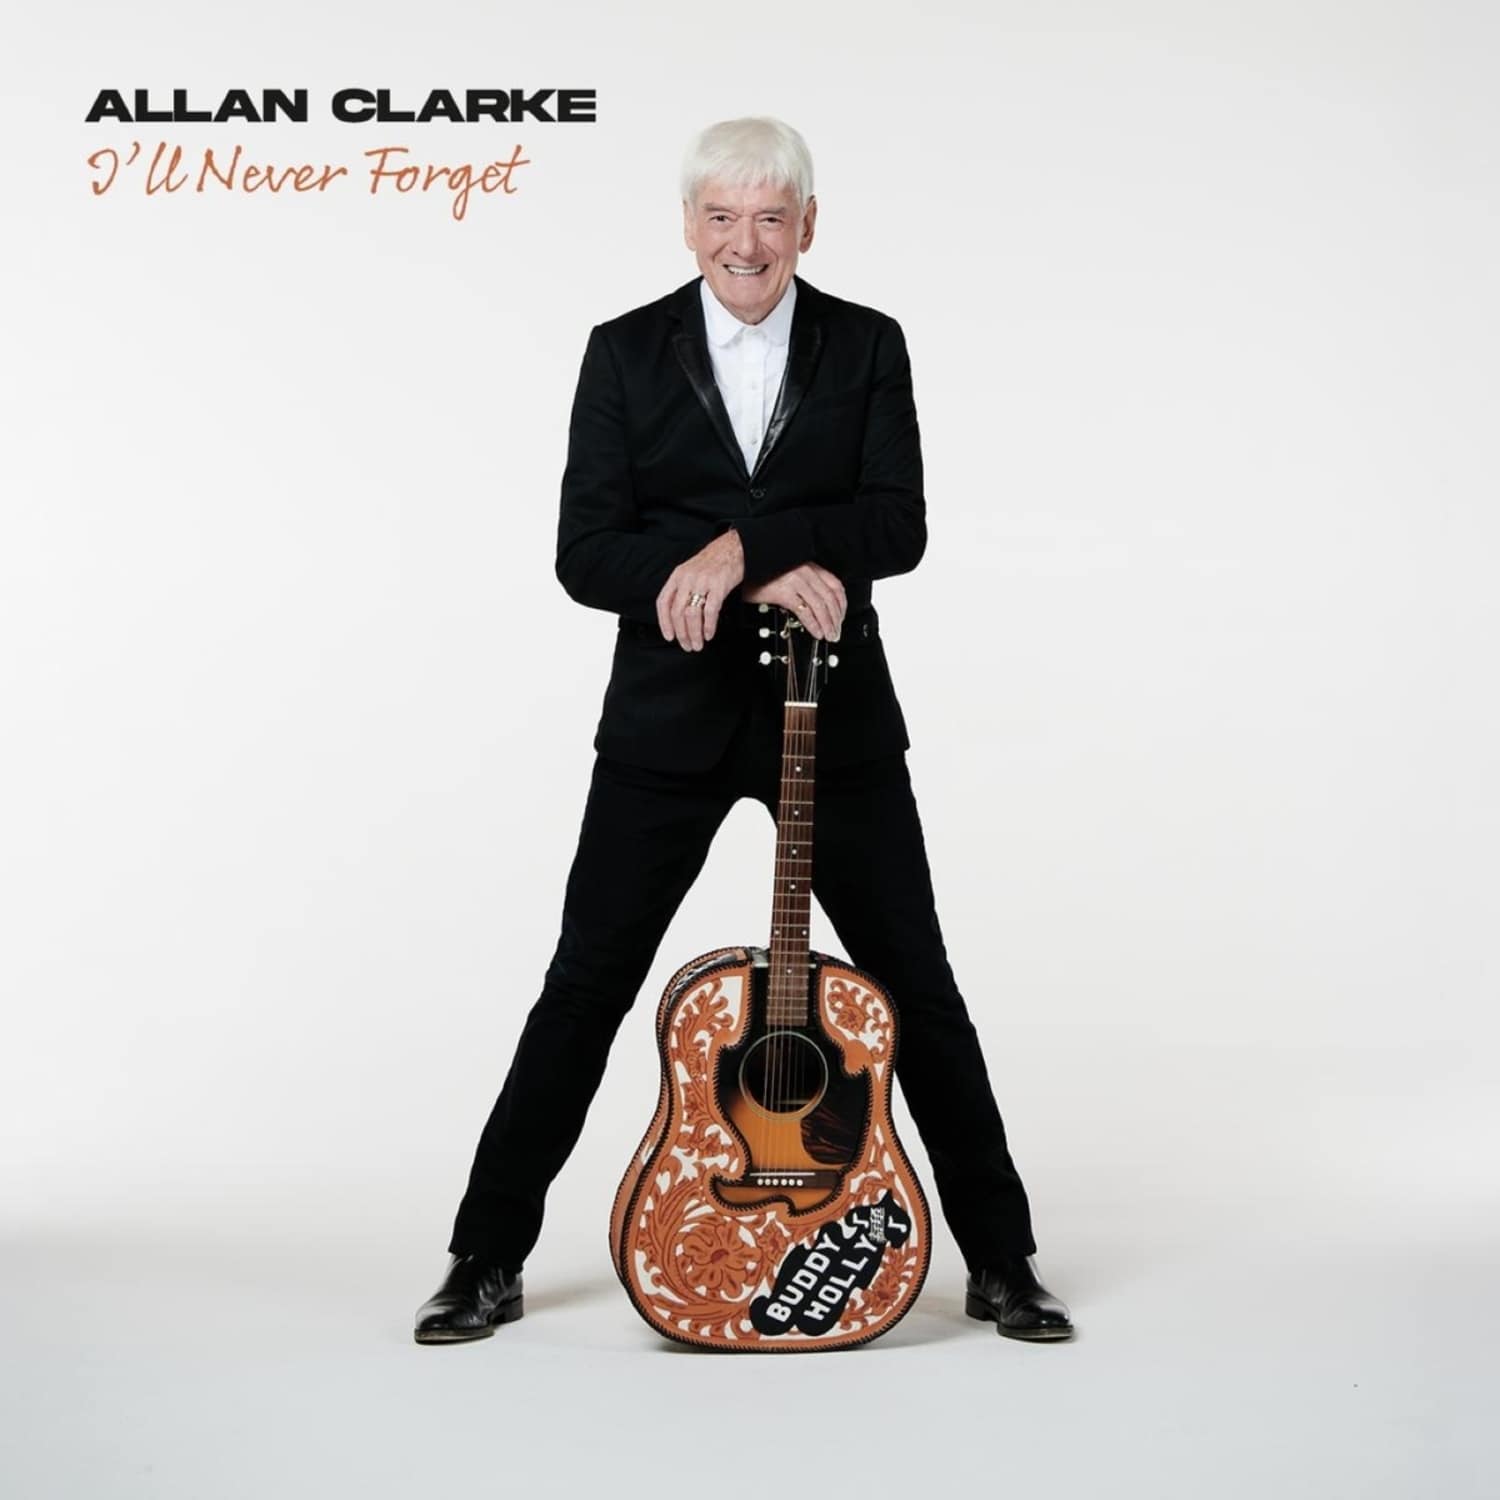  Allan Clarke - I LL NEVER FORGET 